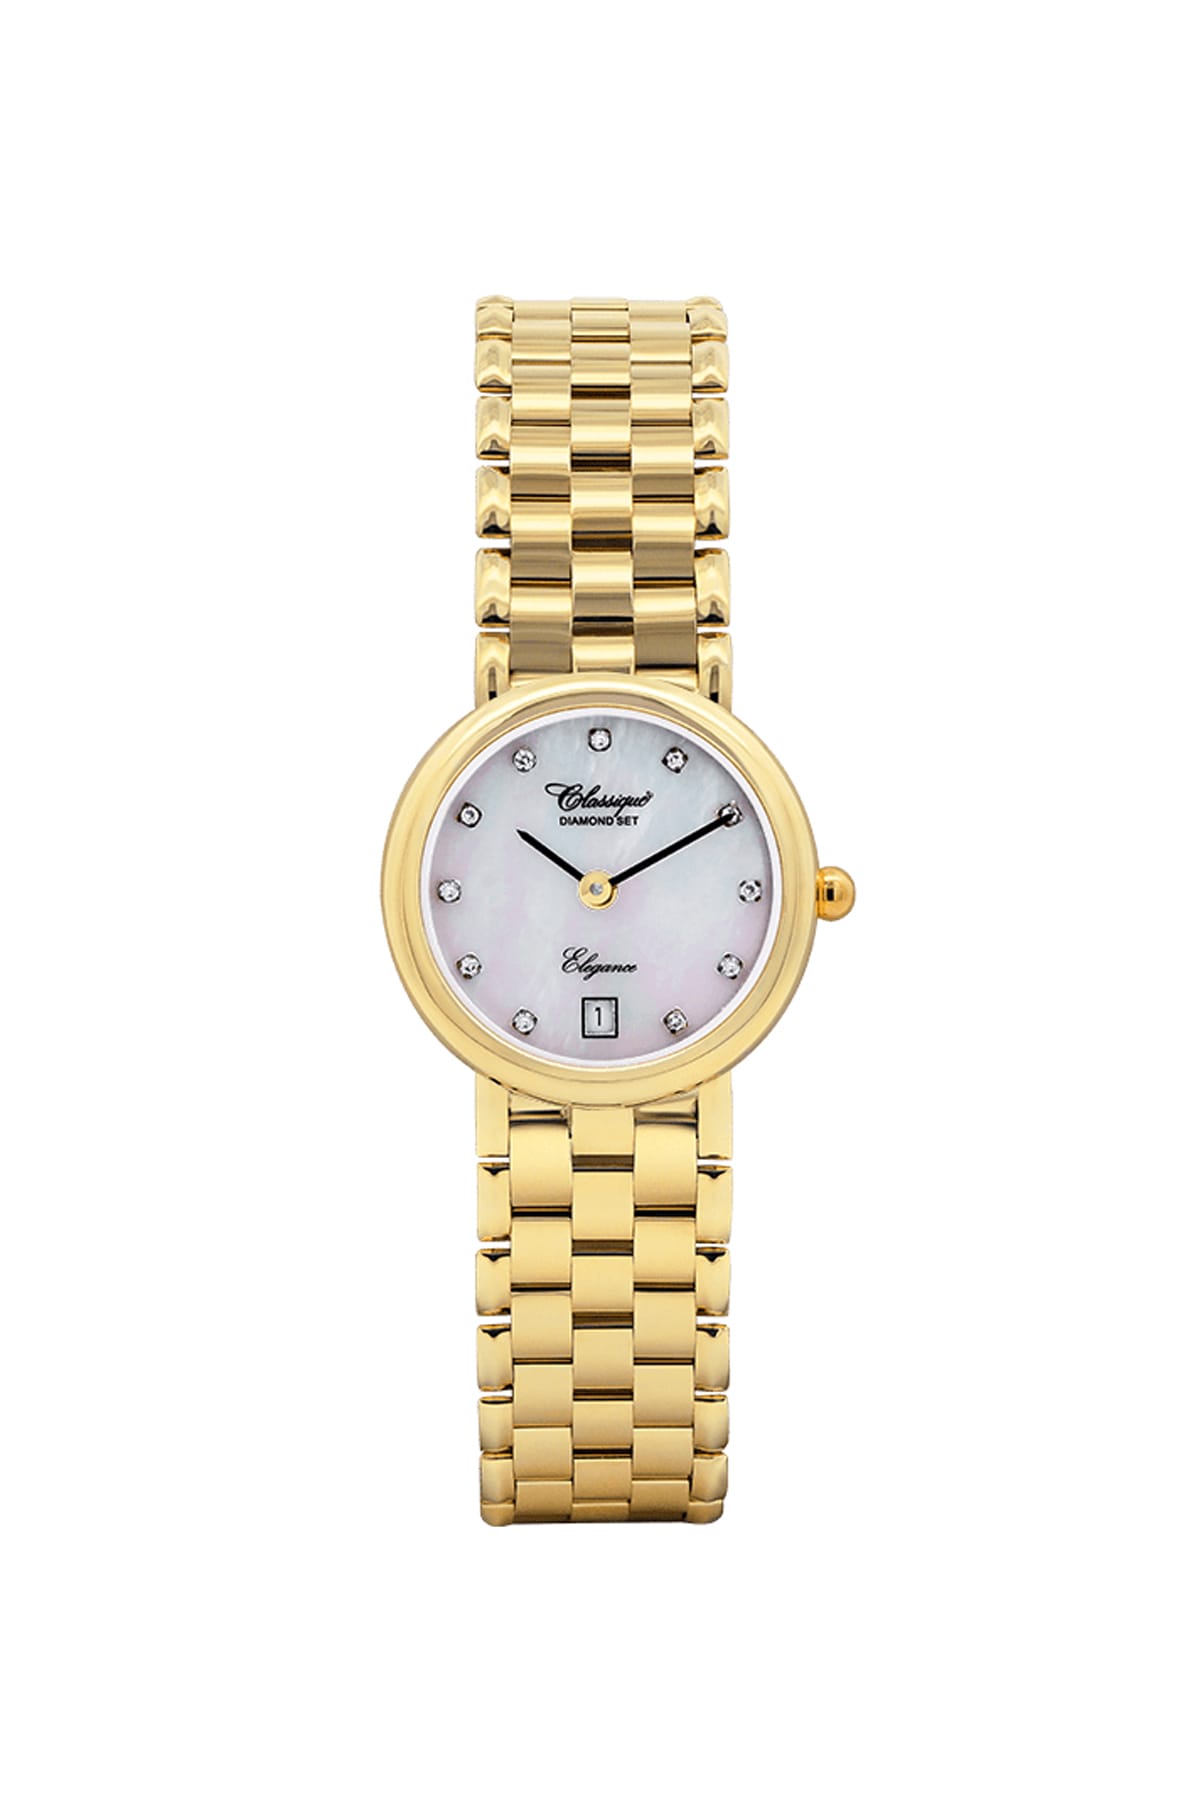 Amelia Classique Swiss Watch available at LeGassick Diamonds and Jewellery Gold Coast, Australia.